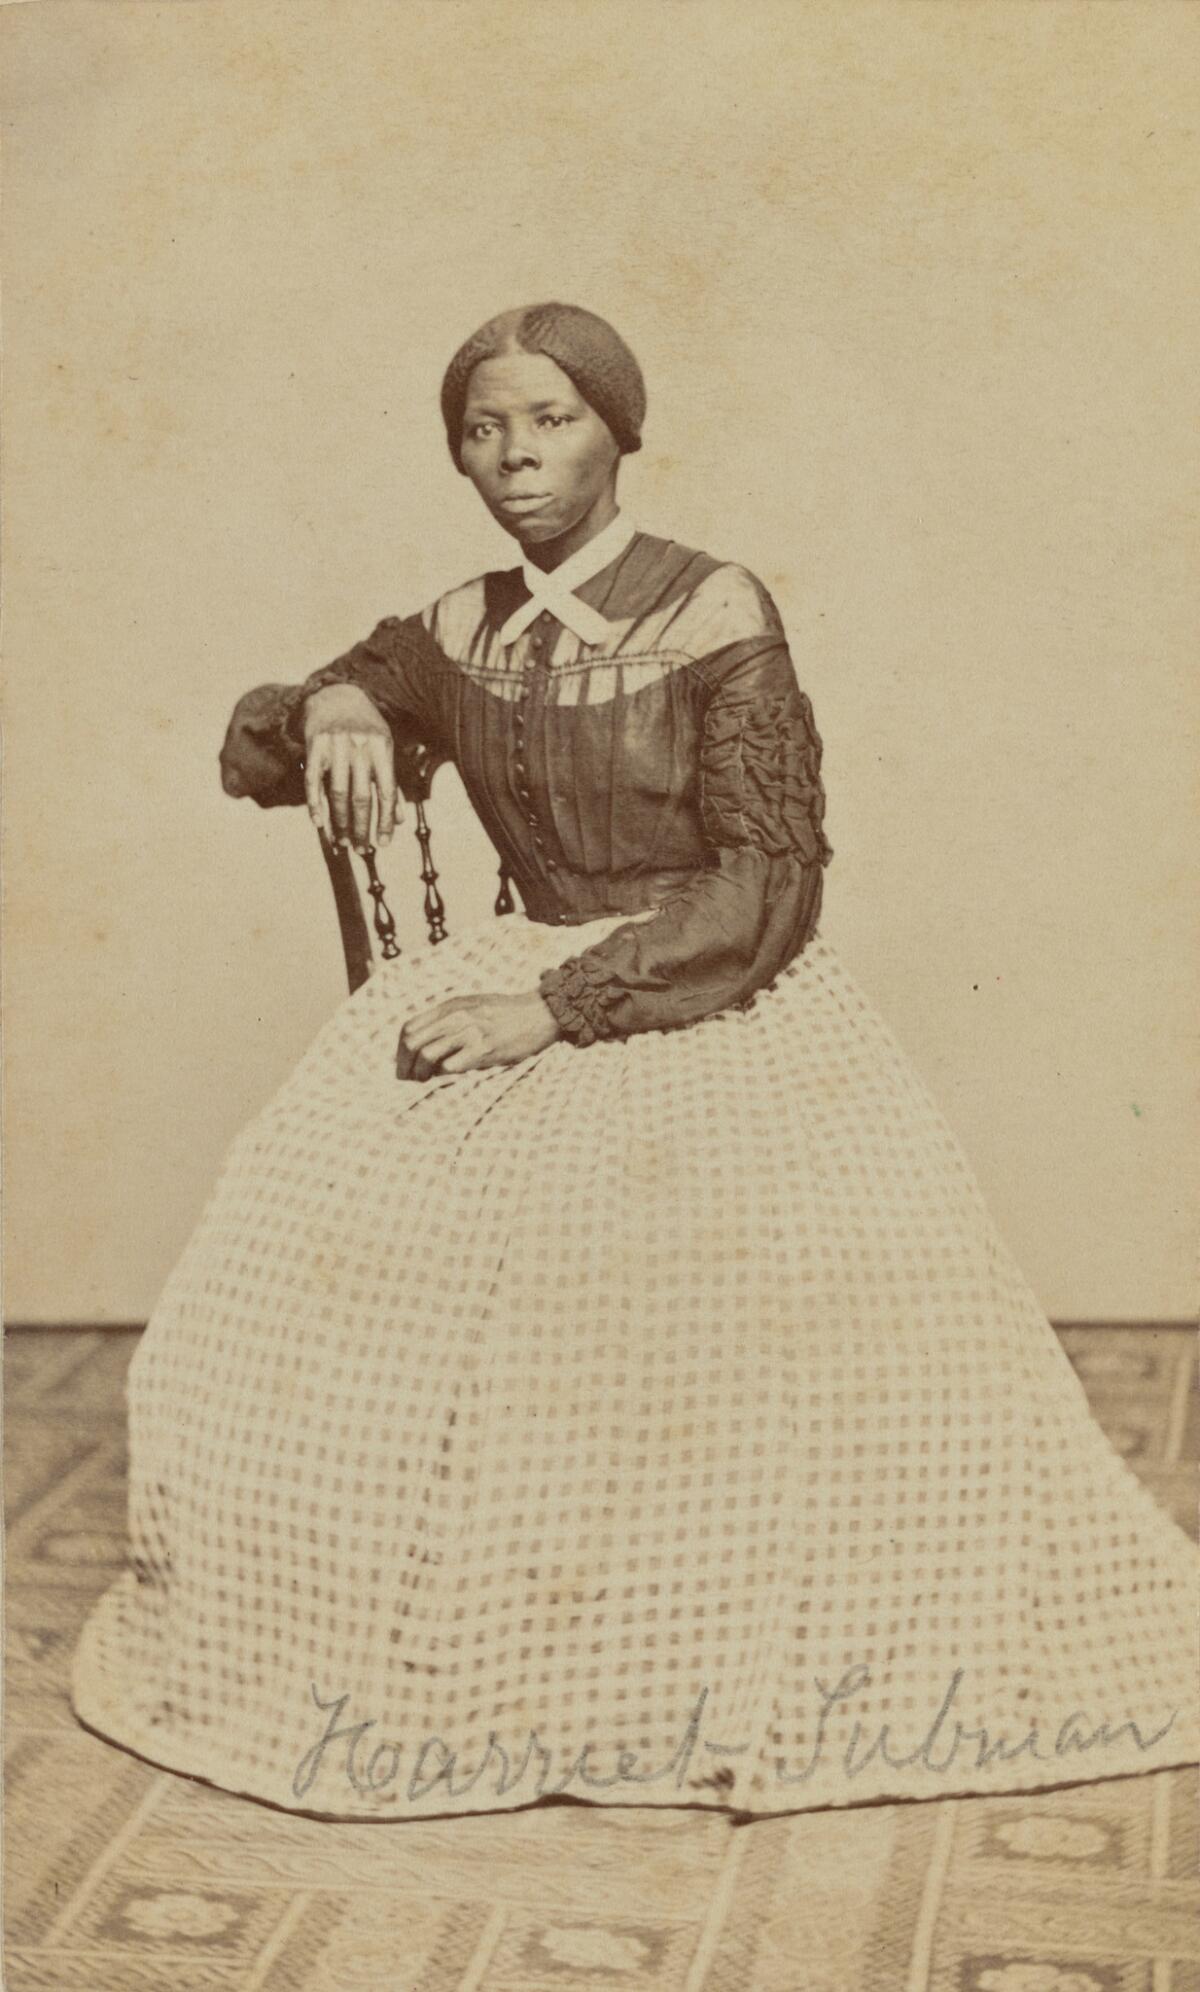 Benjamin F. Powelson photograph of Harriet Tubman, 1868 or 1869.